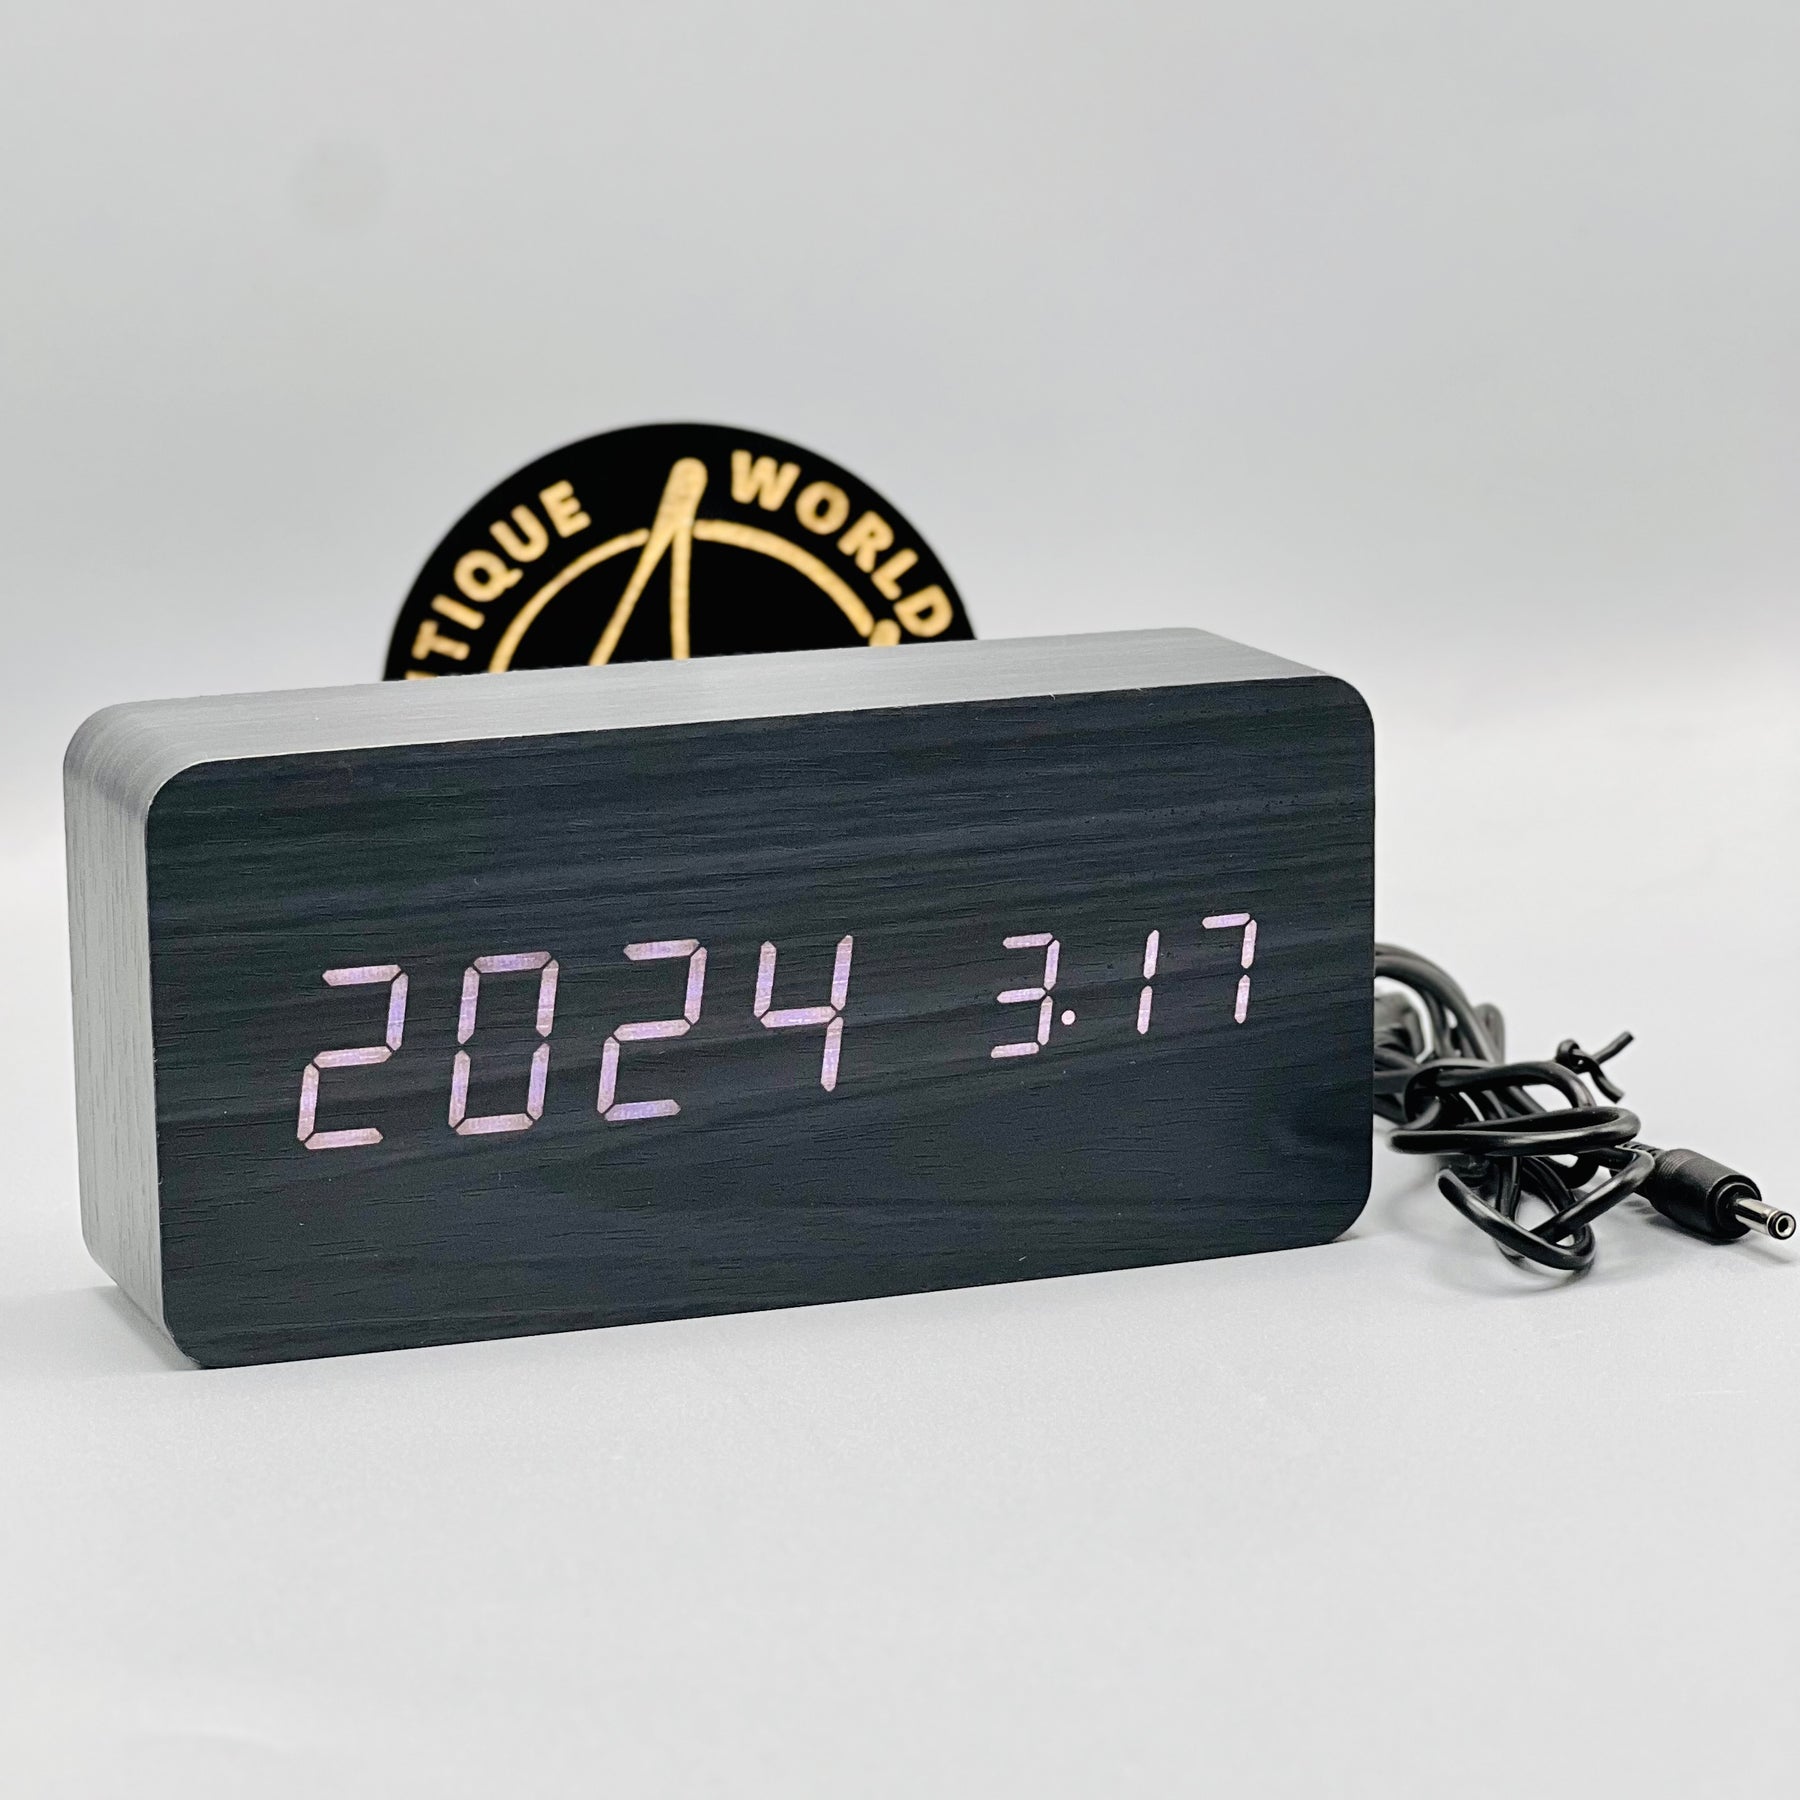 Studio Desk LED  Clock ,Time , Date & Temperature Display Decor